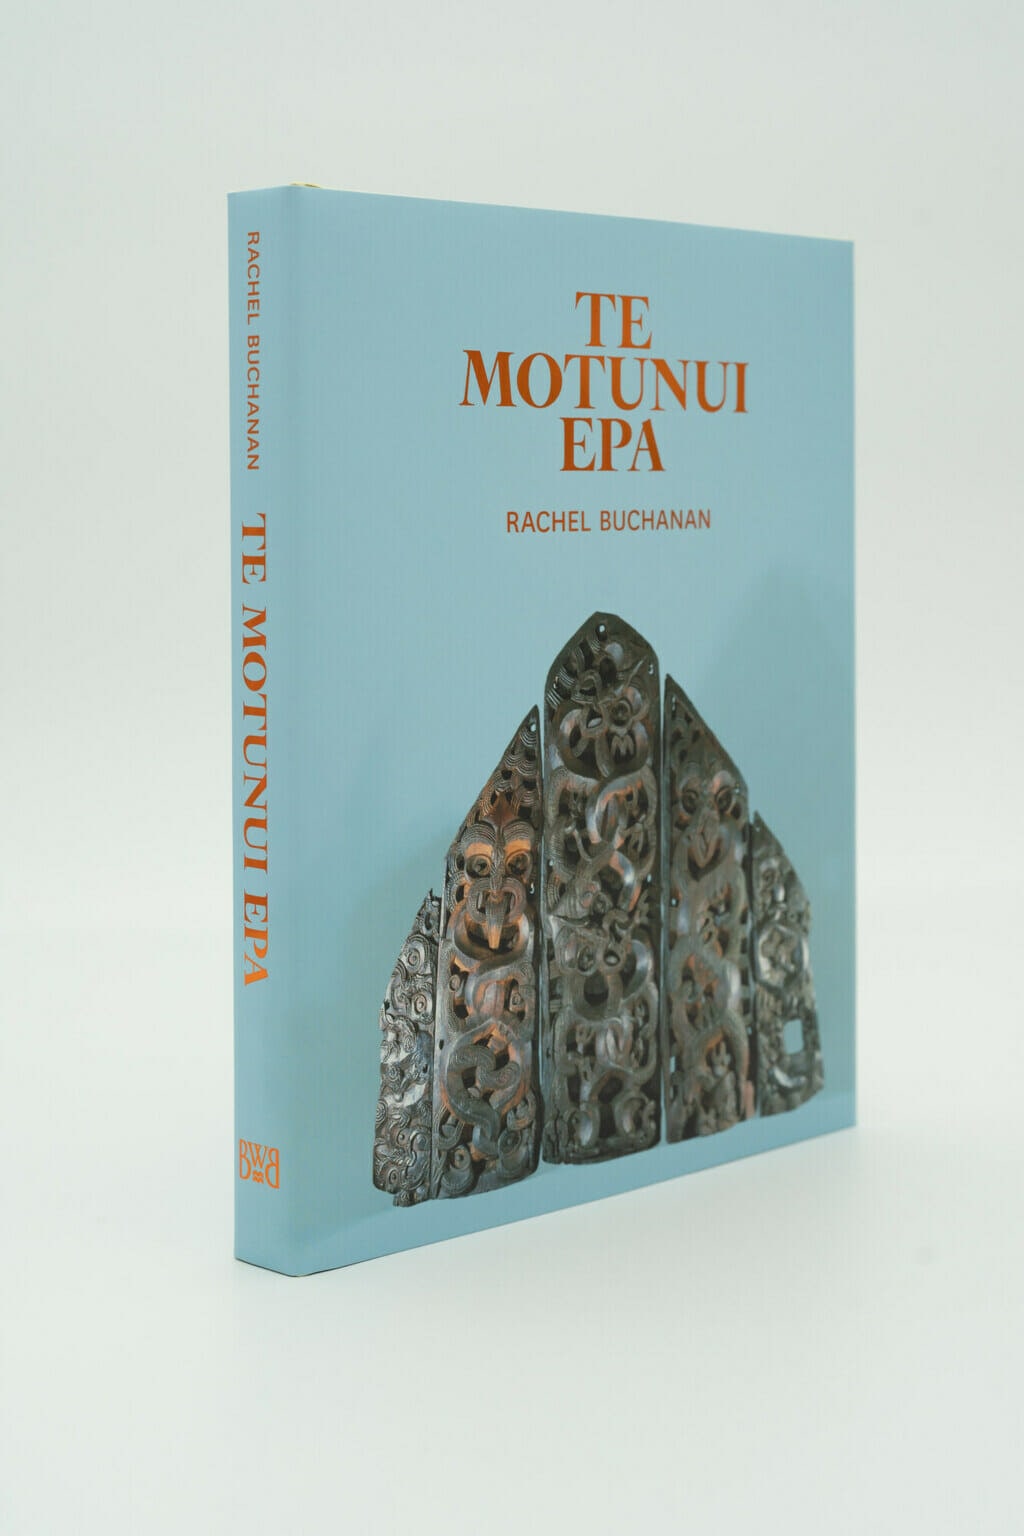 Te Motunui Epa, Rachel Buchanan book cover in front of white background